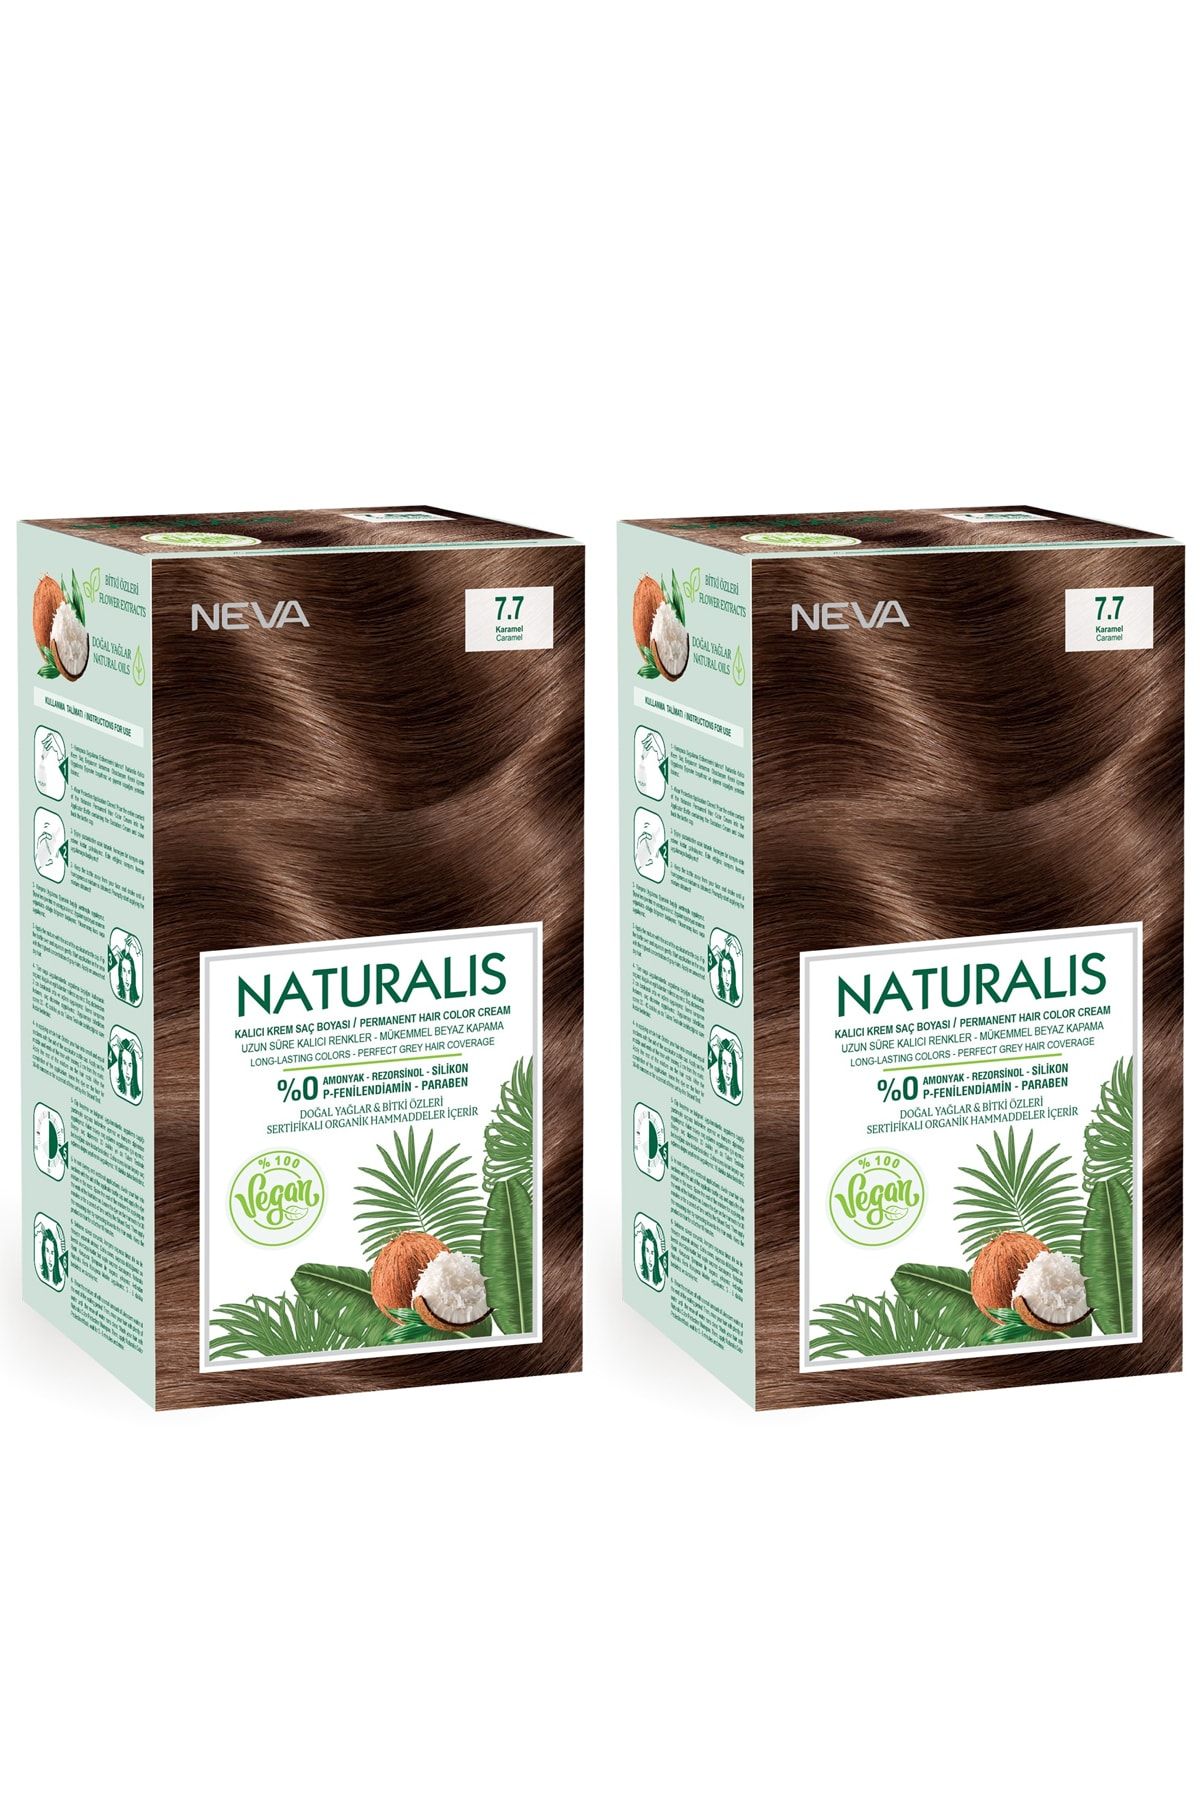 NEVA KOZMETİK Naturalis Saç Boyası 7.7 Karamel %100 Vegan 2'li Set